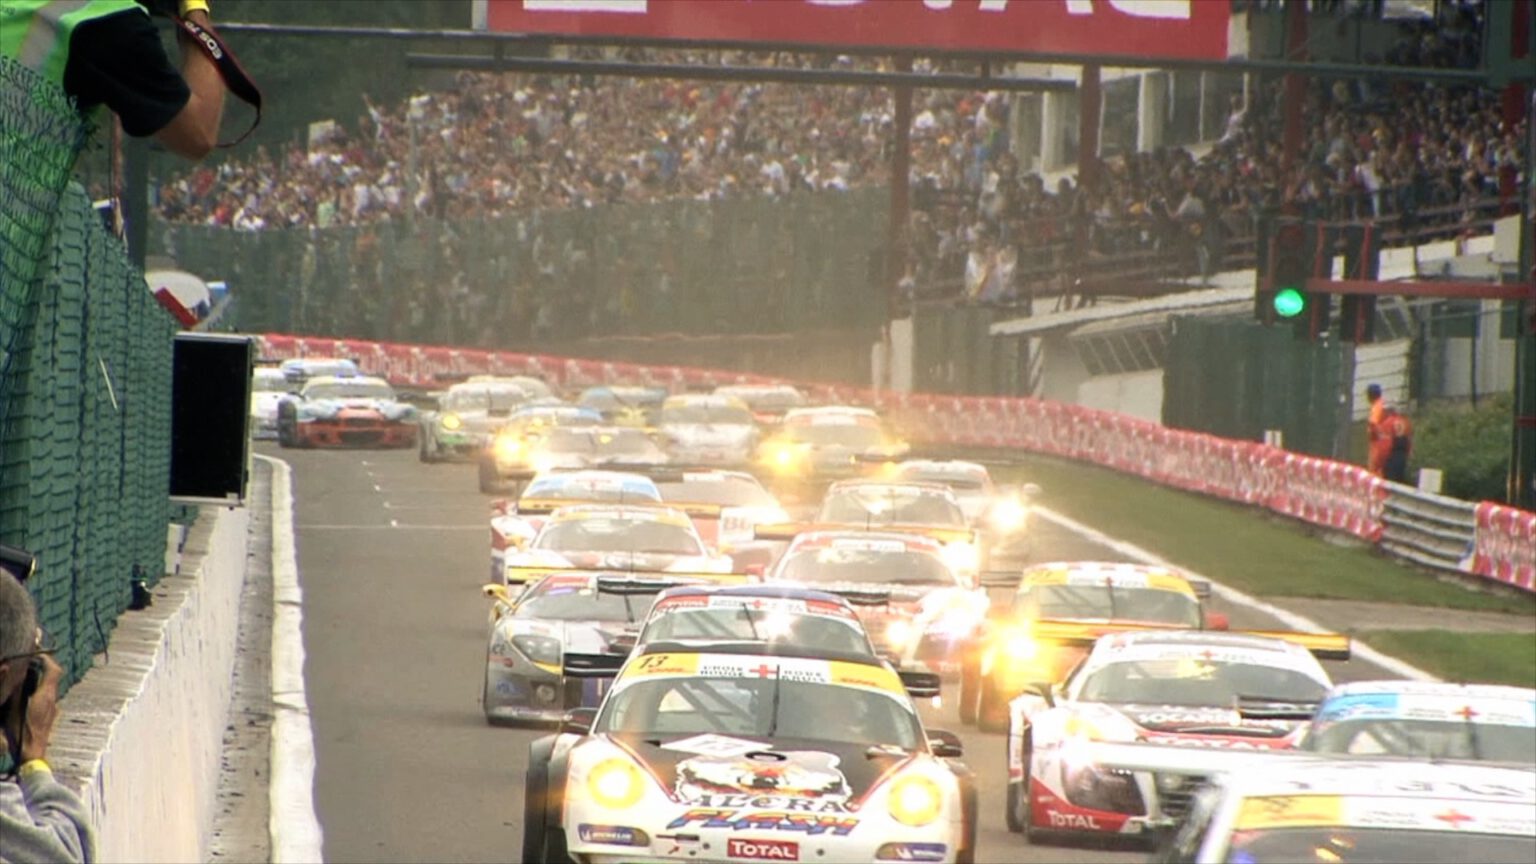 Porsche Carrera Cup